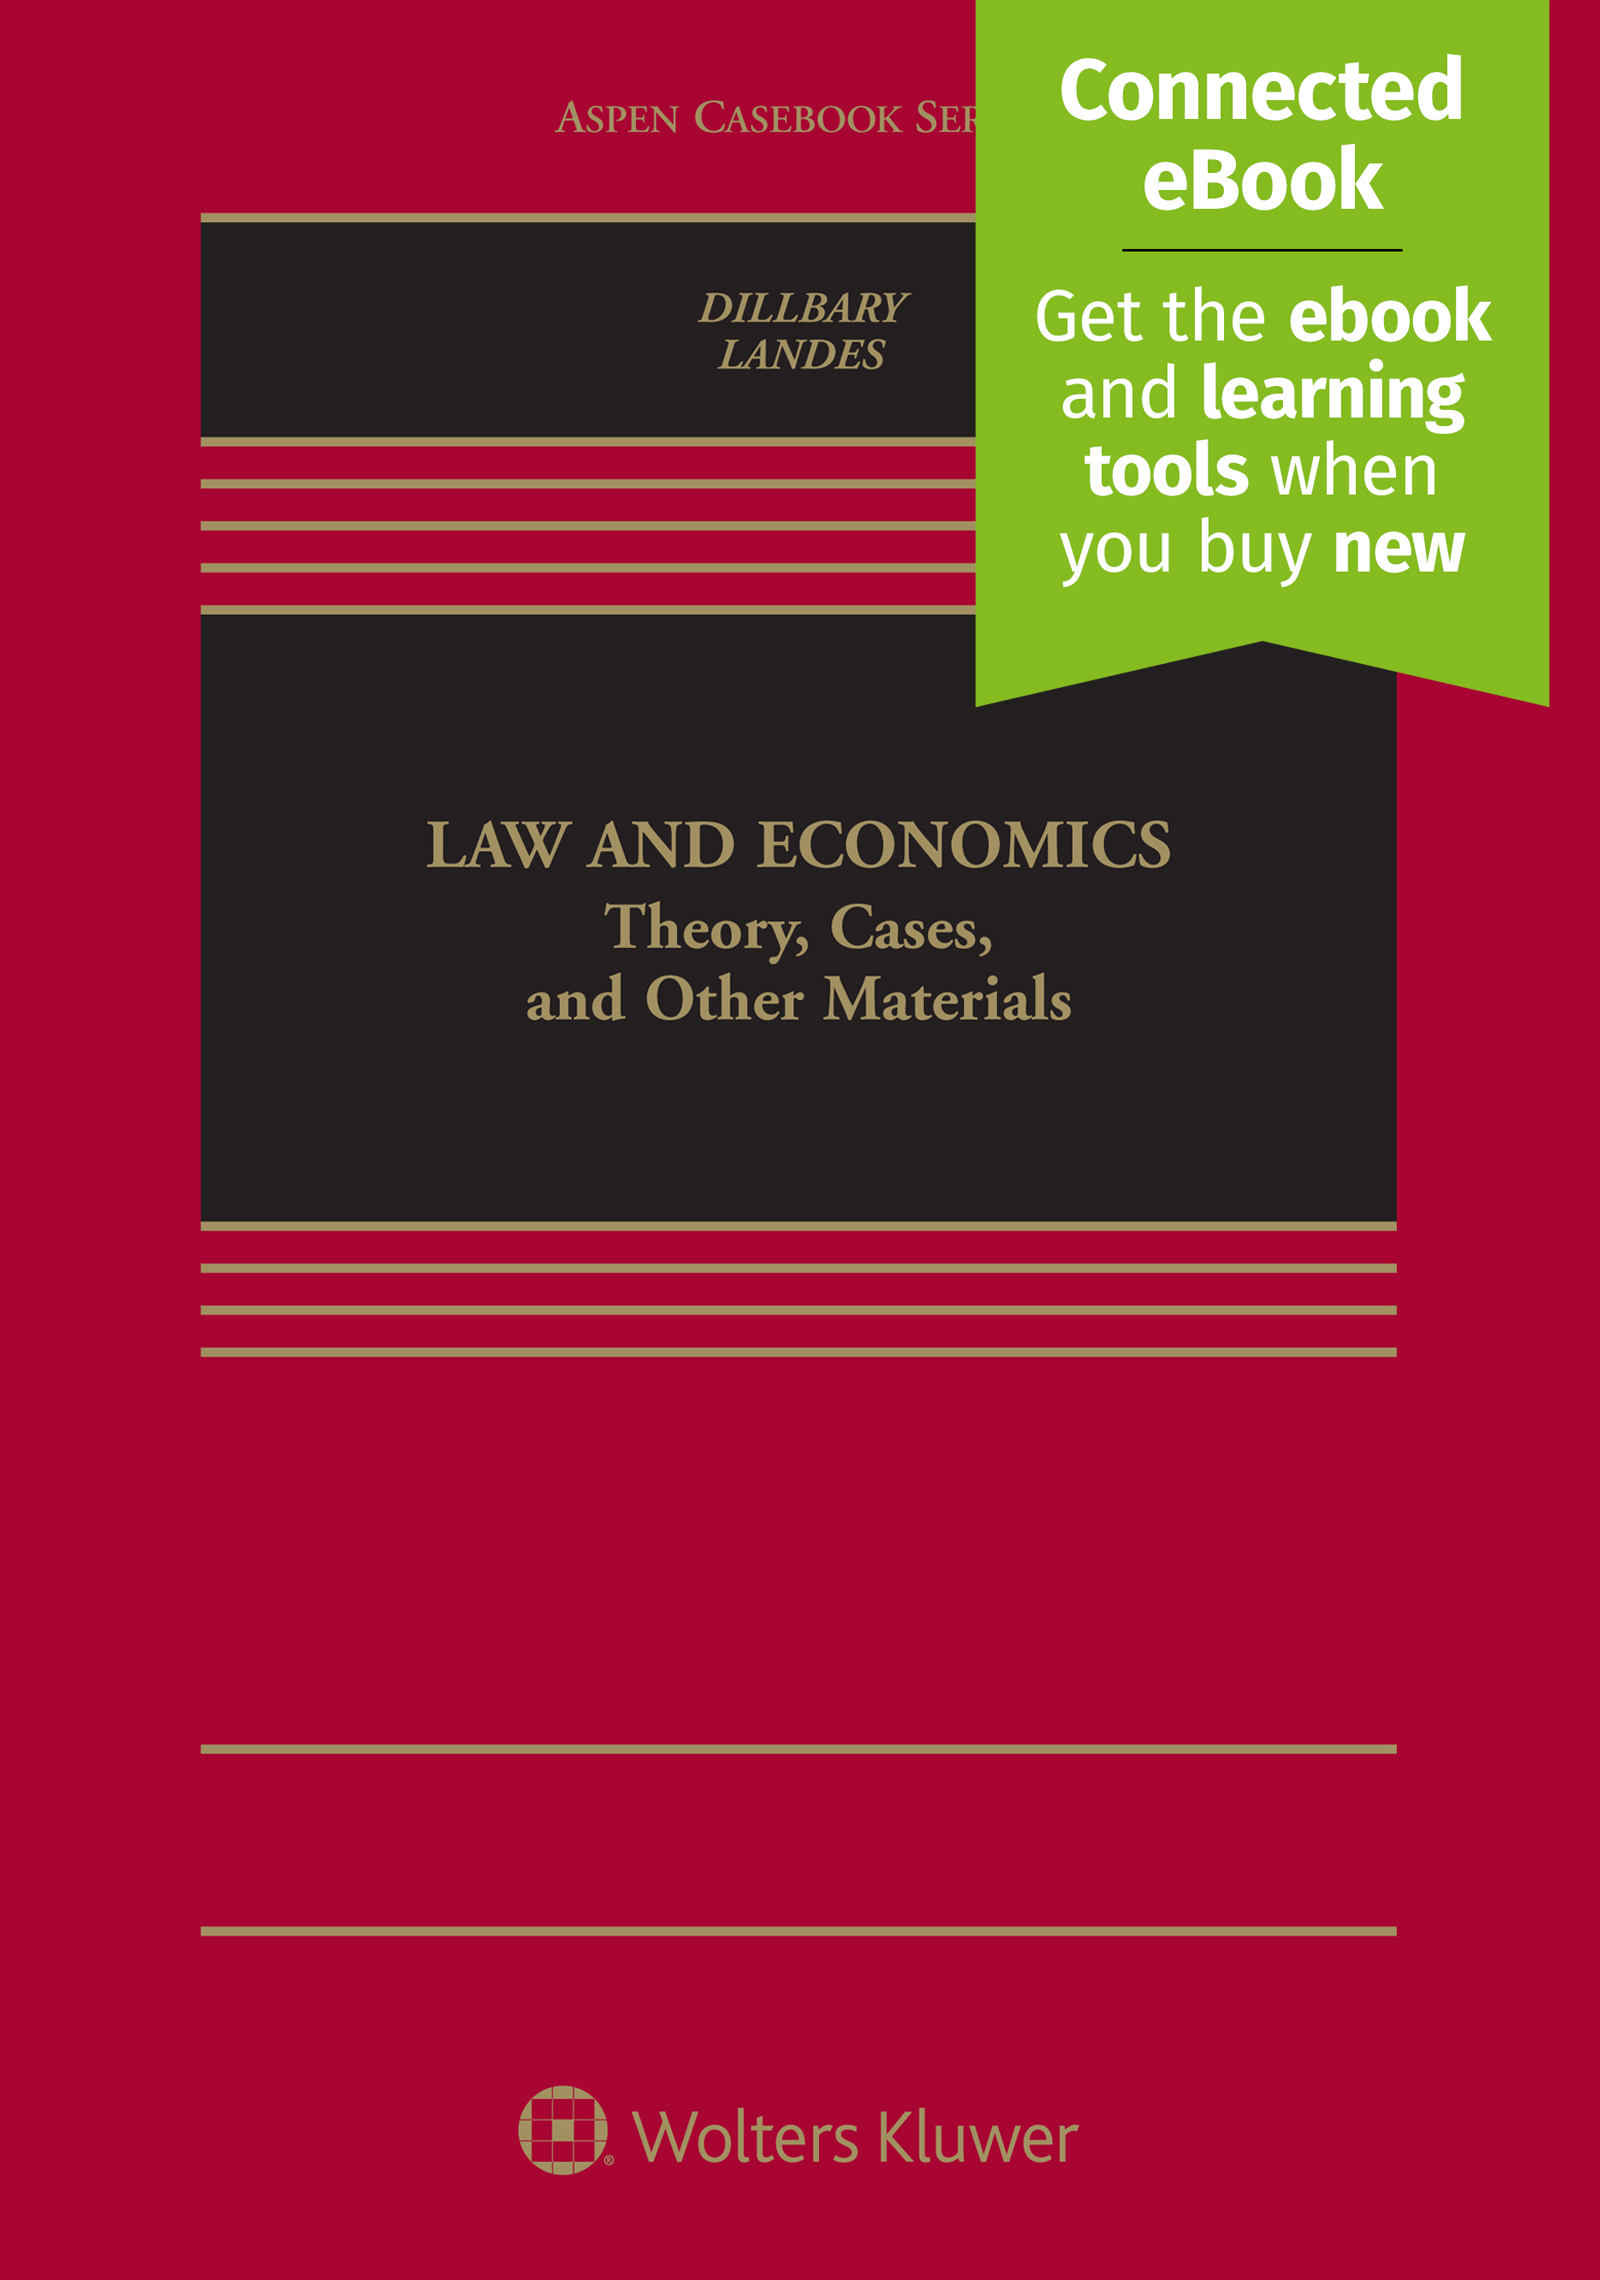 Law & Economics casebook cover